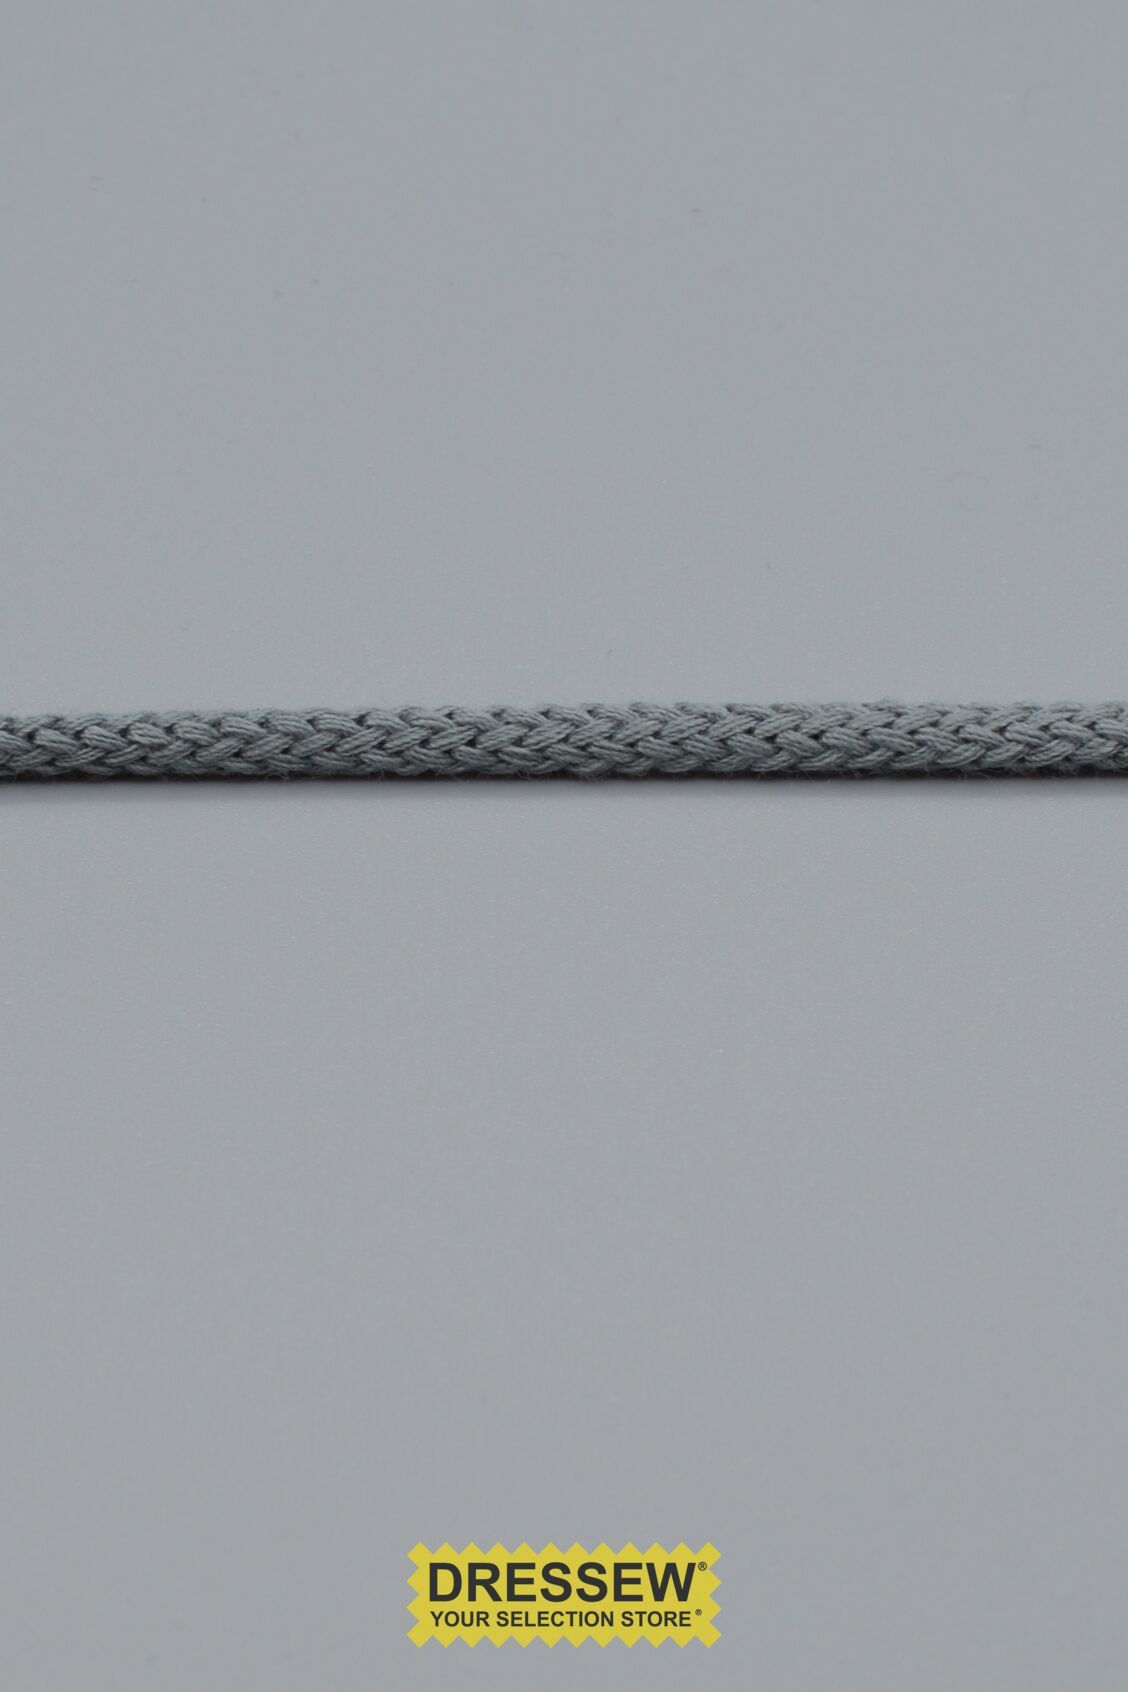 Cord 3mm (1/8") Light Grey